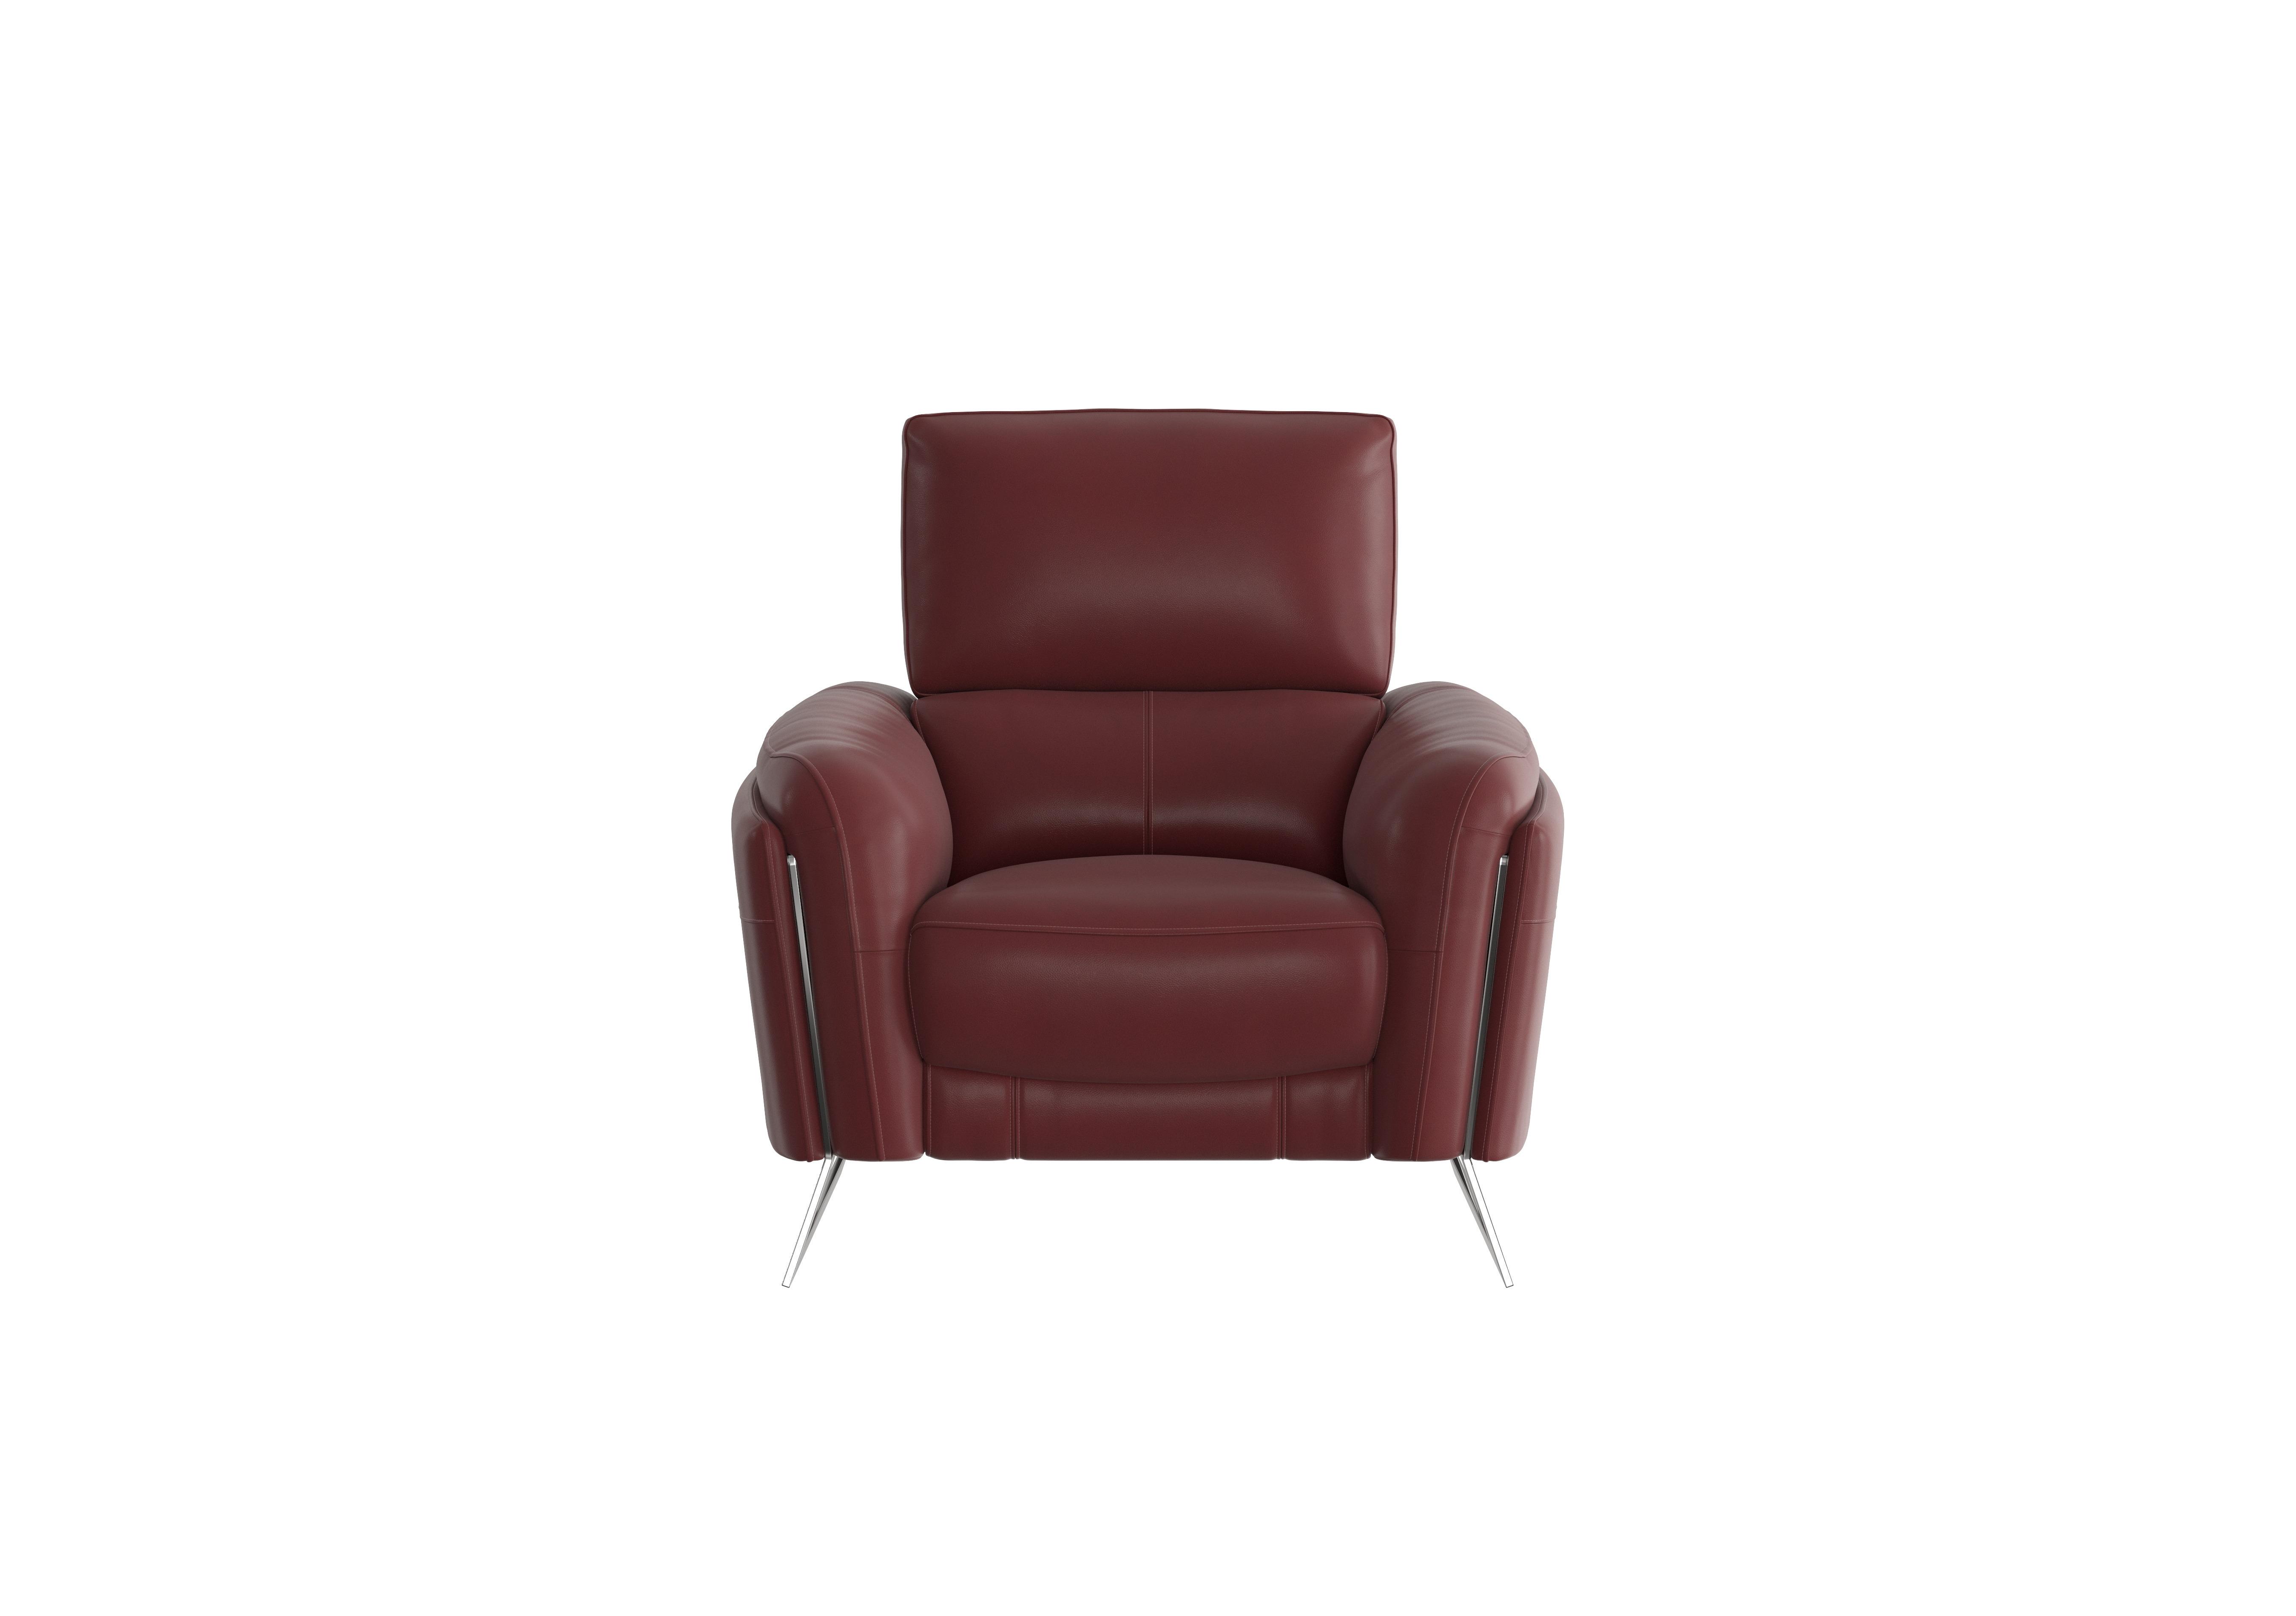 Amarilla Leather Armchair in Bv-035c Deep Red on Furniture Village